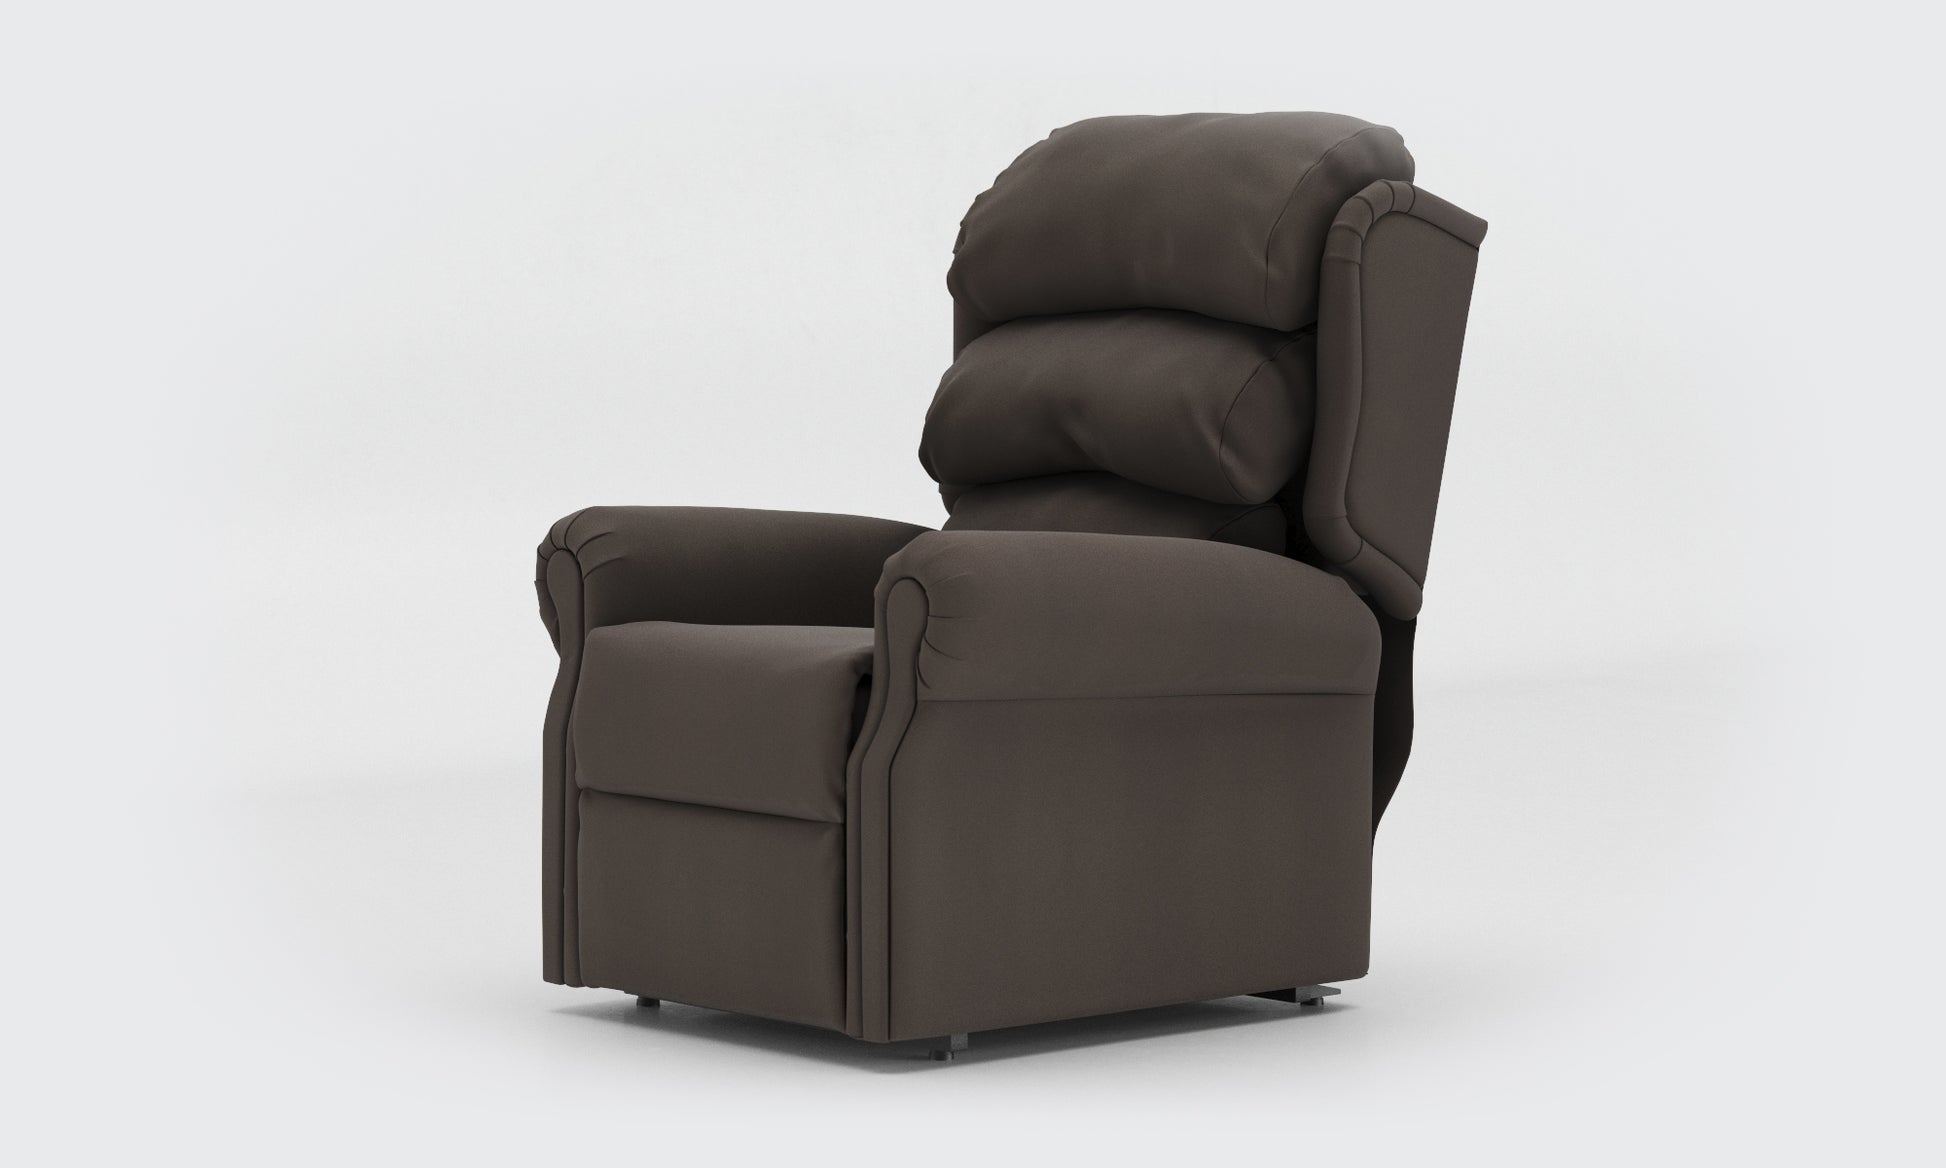 Adara Riser Recliner Chair standard waterfall leather meteor